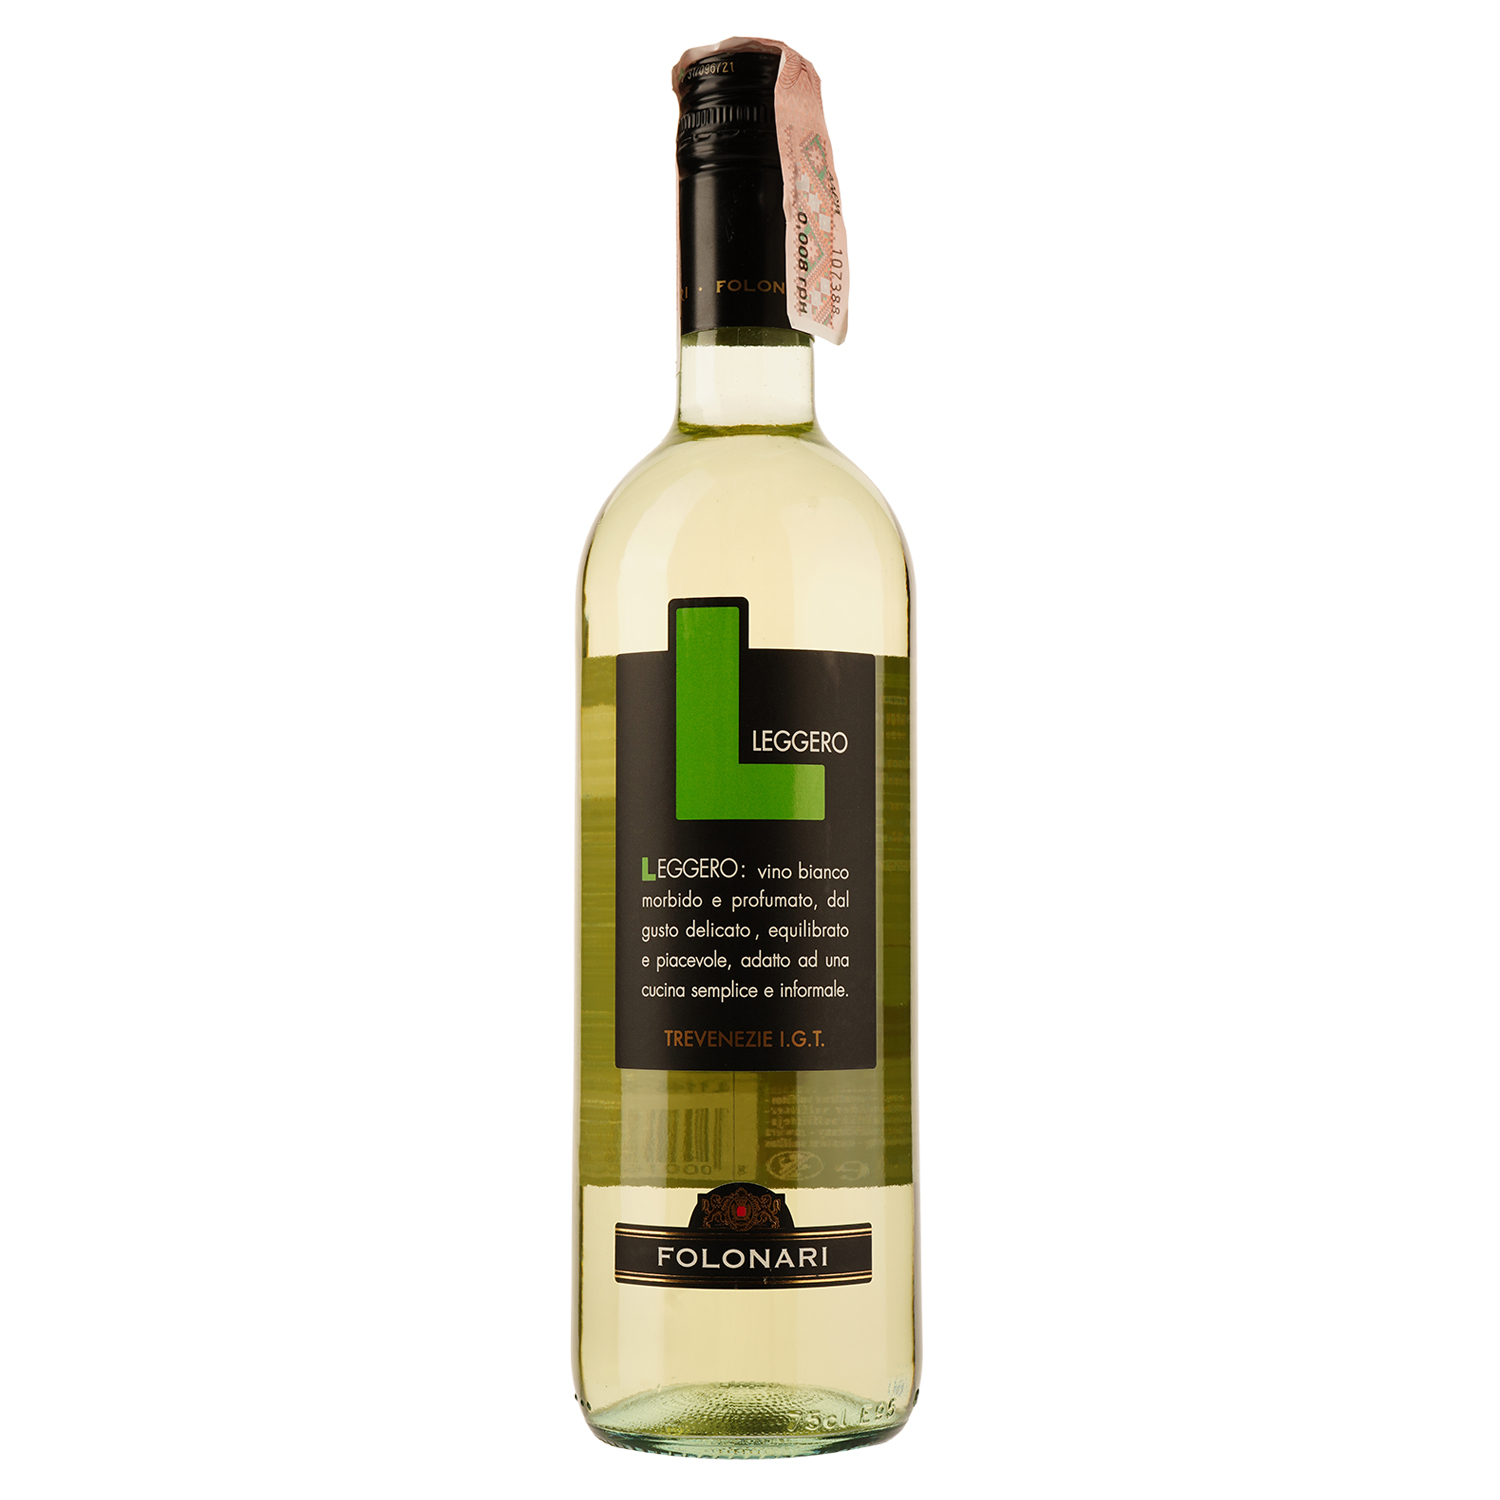 Вино Folonari Leggero L delle Trevenezie IGT, белое, сухое, 0,75 л - фото 1